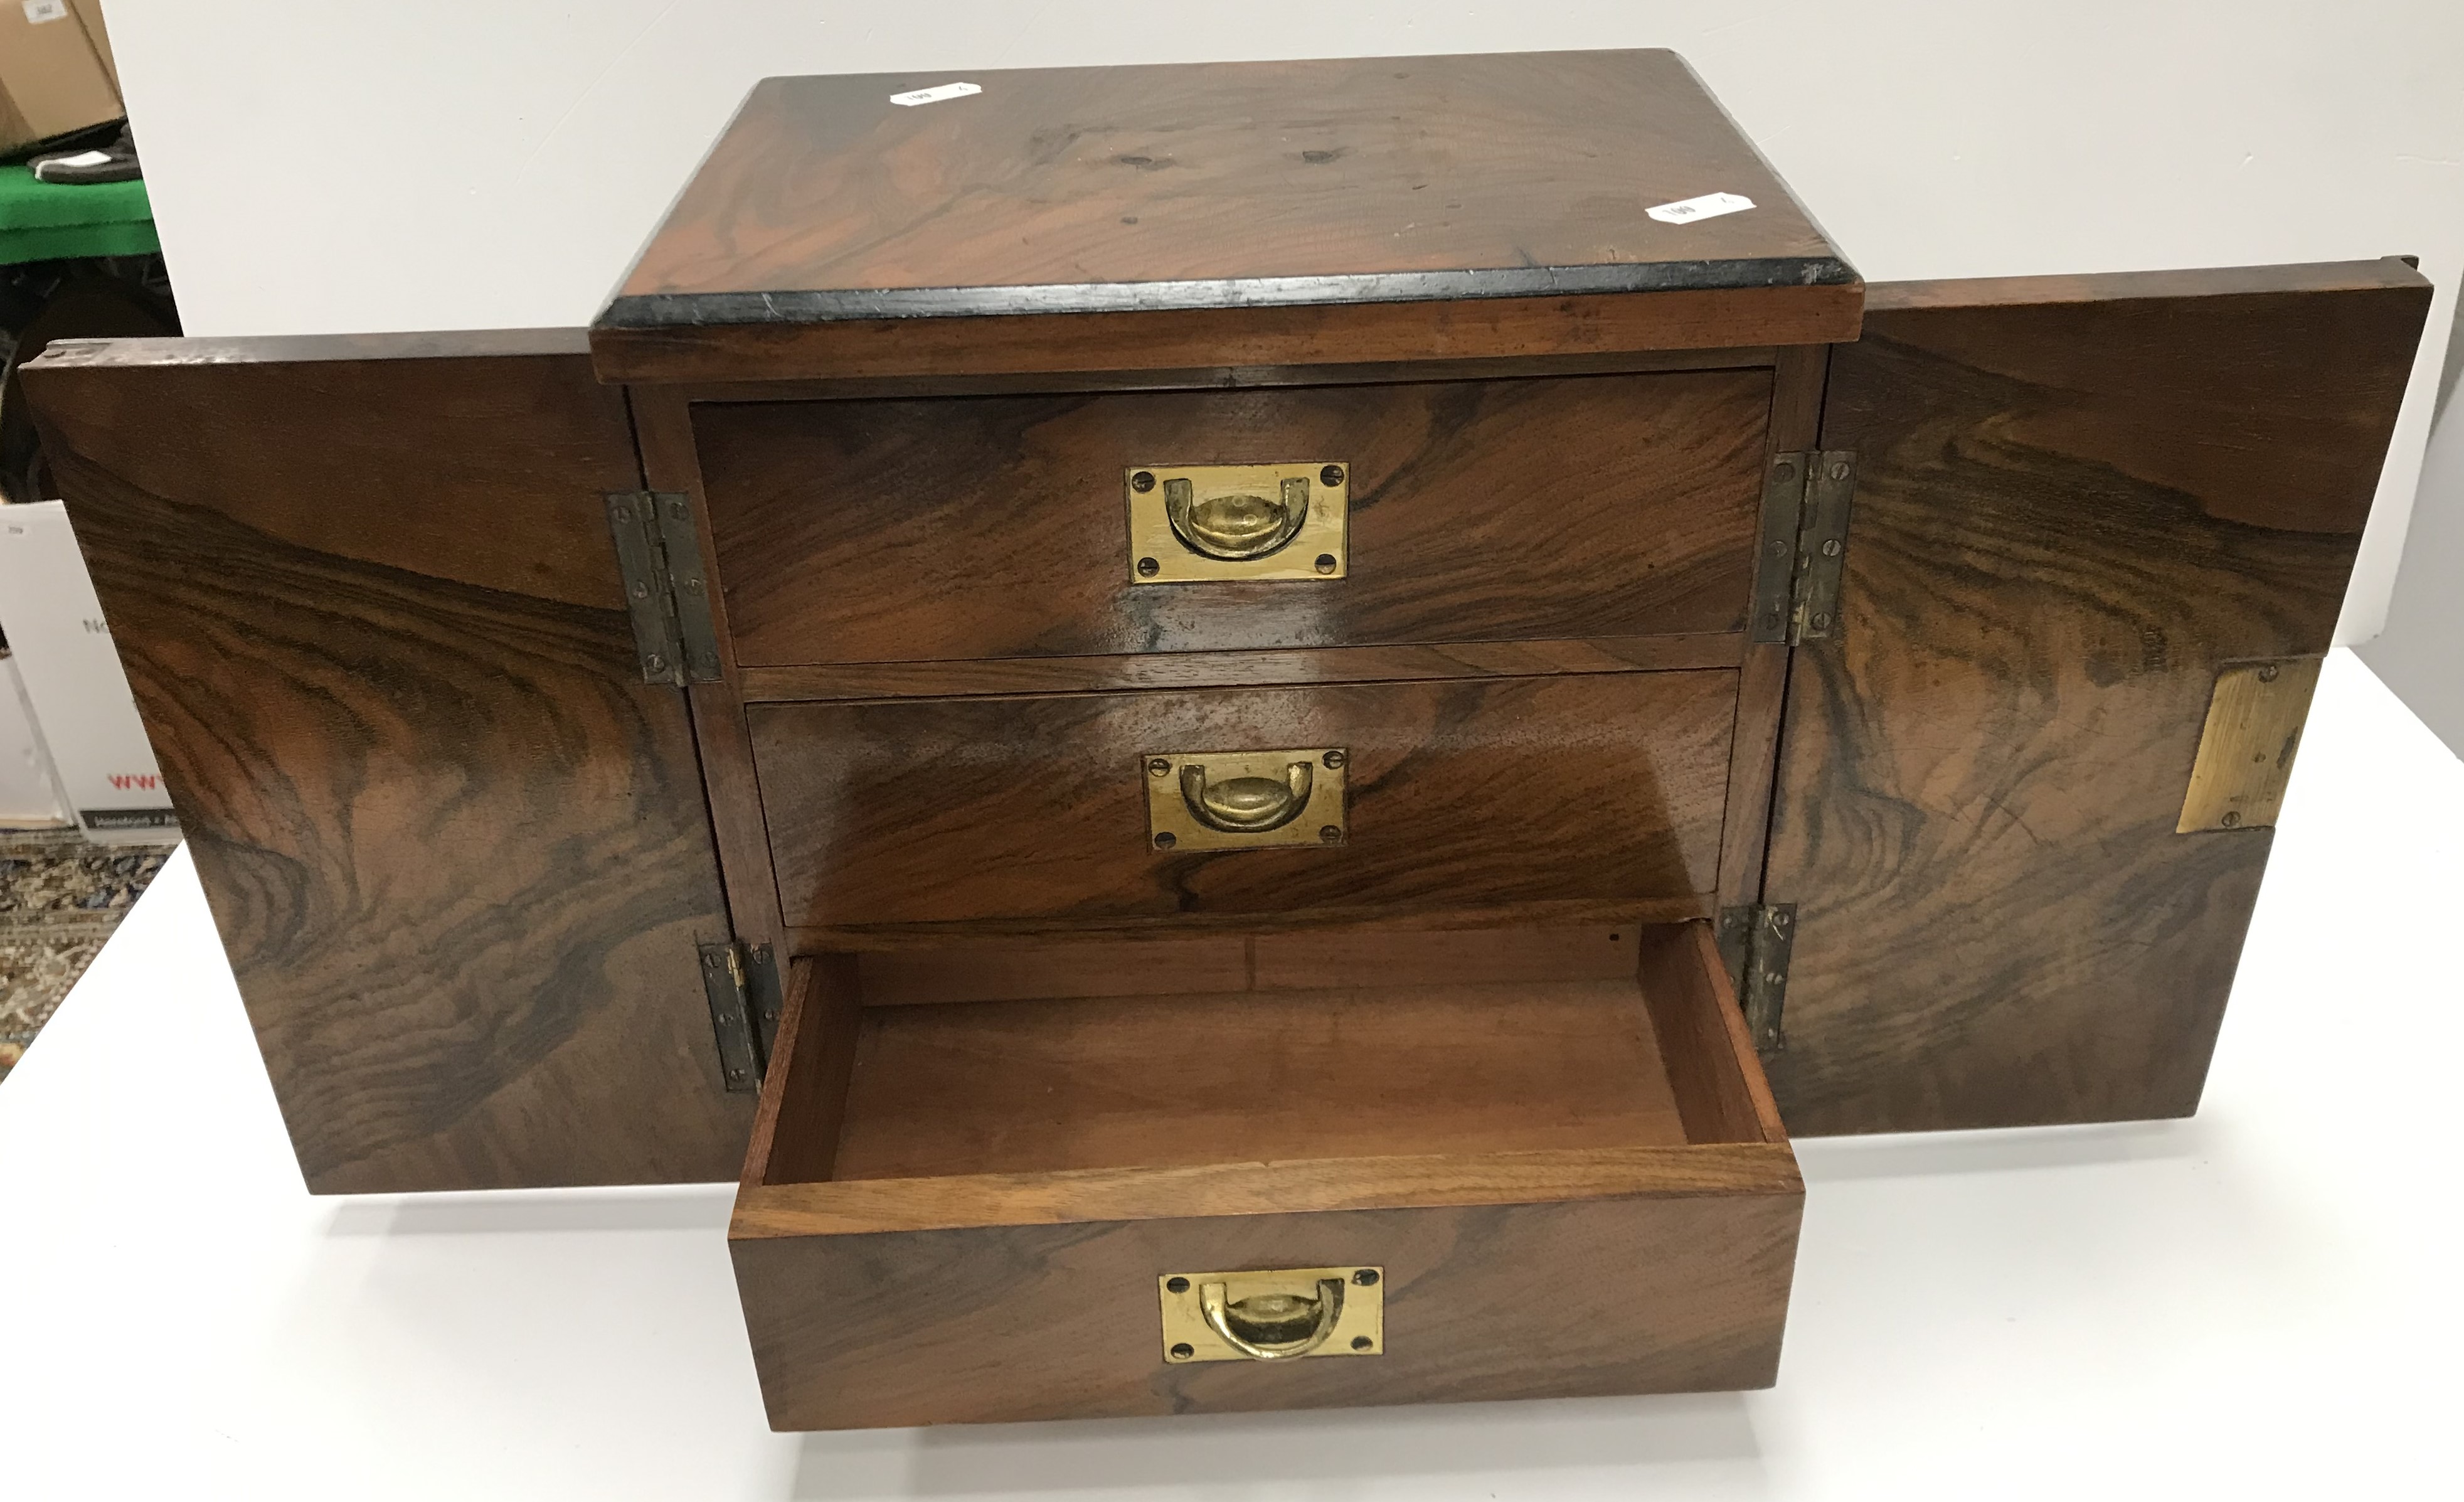 A circa 1900 walnut table top chest/ciga - Image 2 of 2